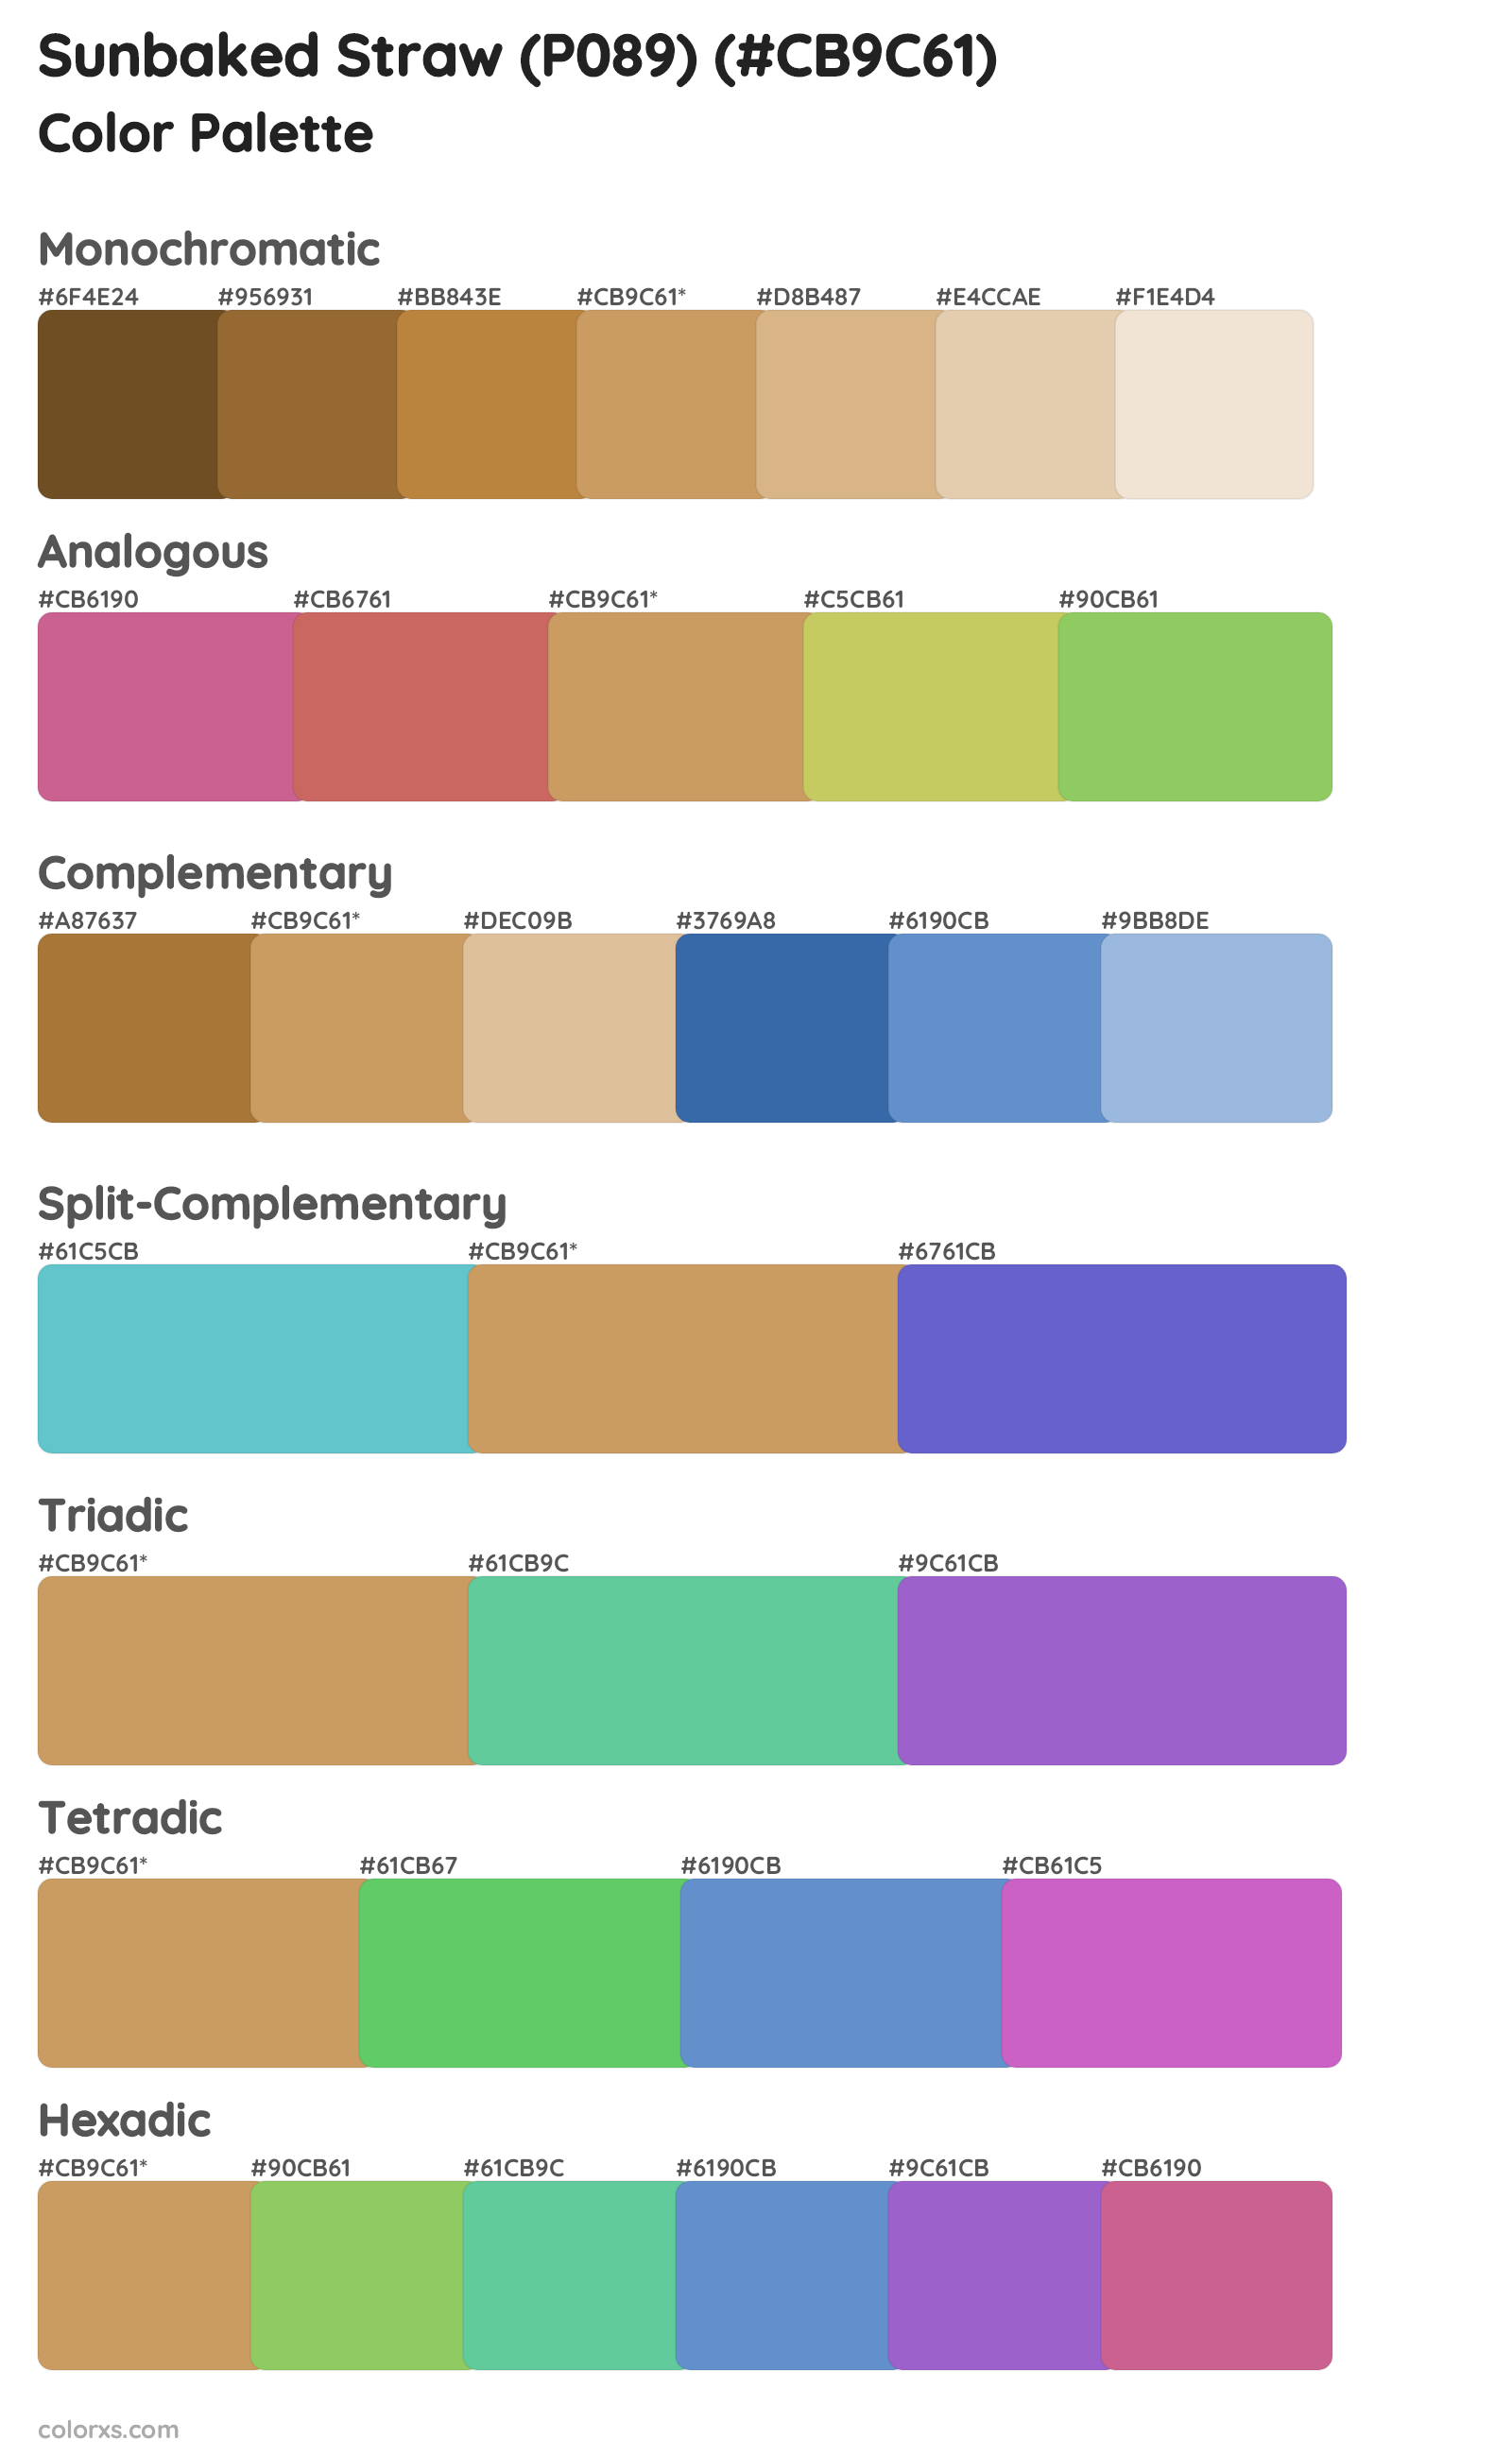 Sunbaked Straw (P089) Color Scheme Palettes